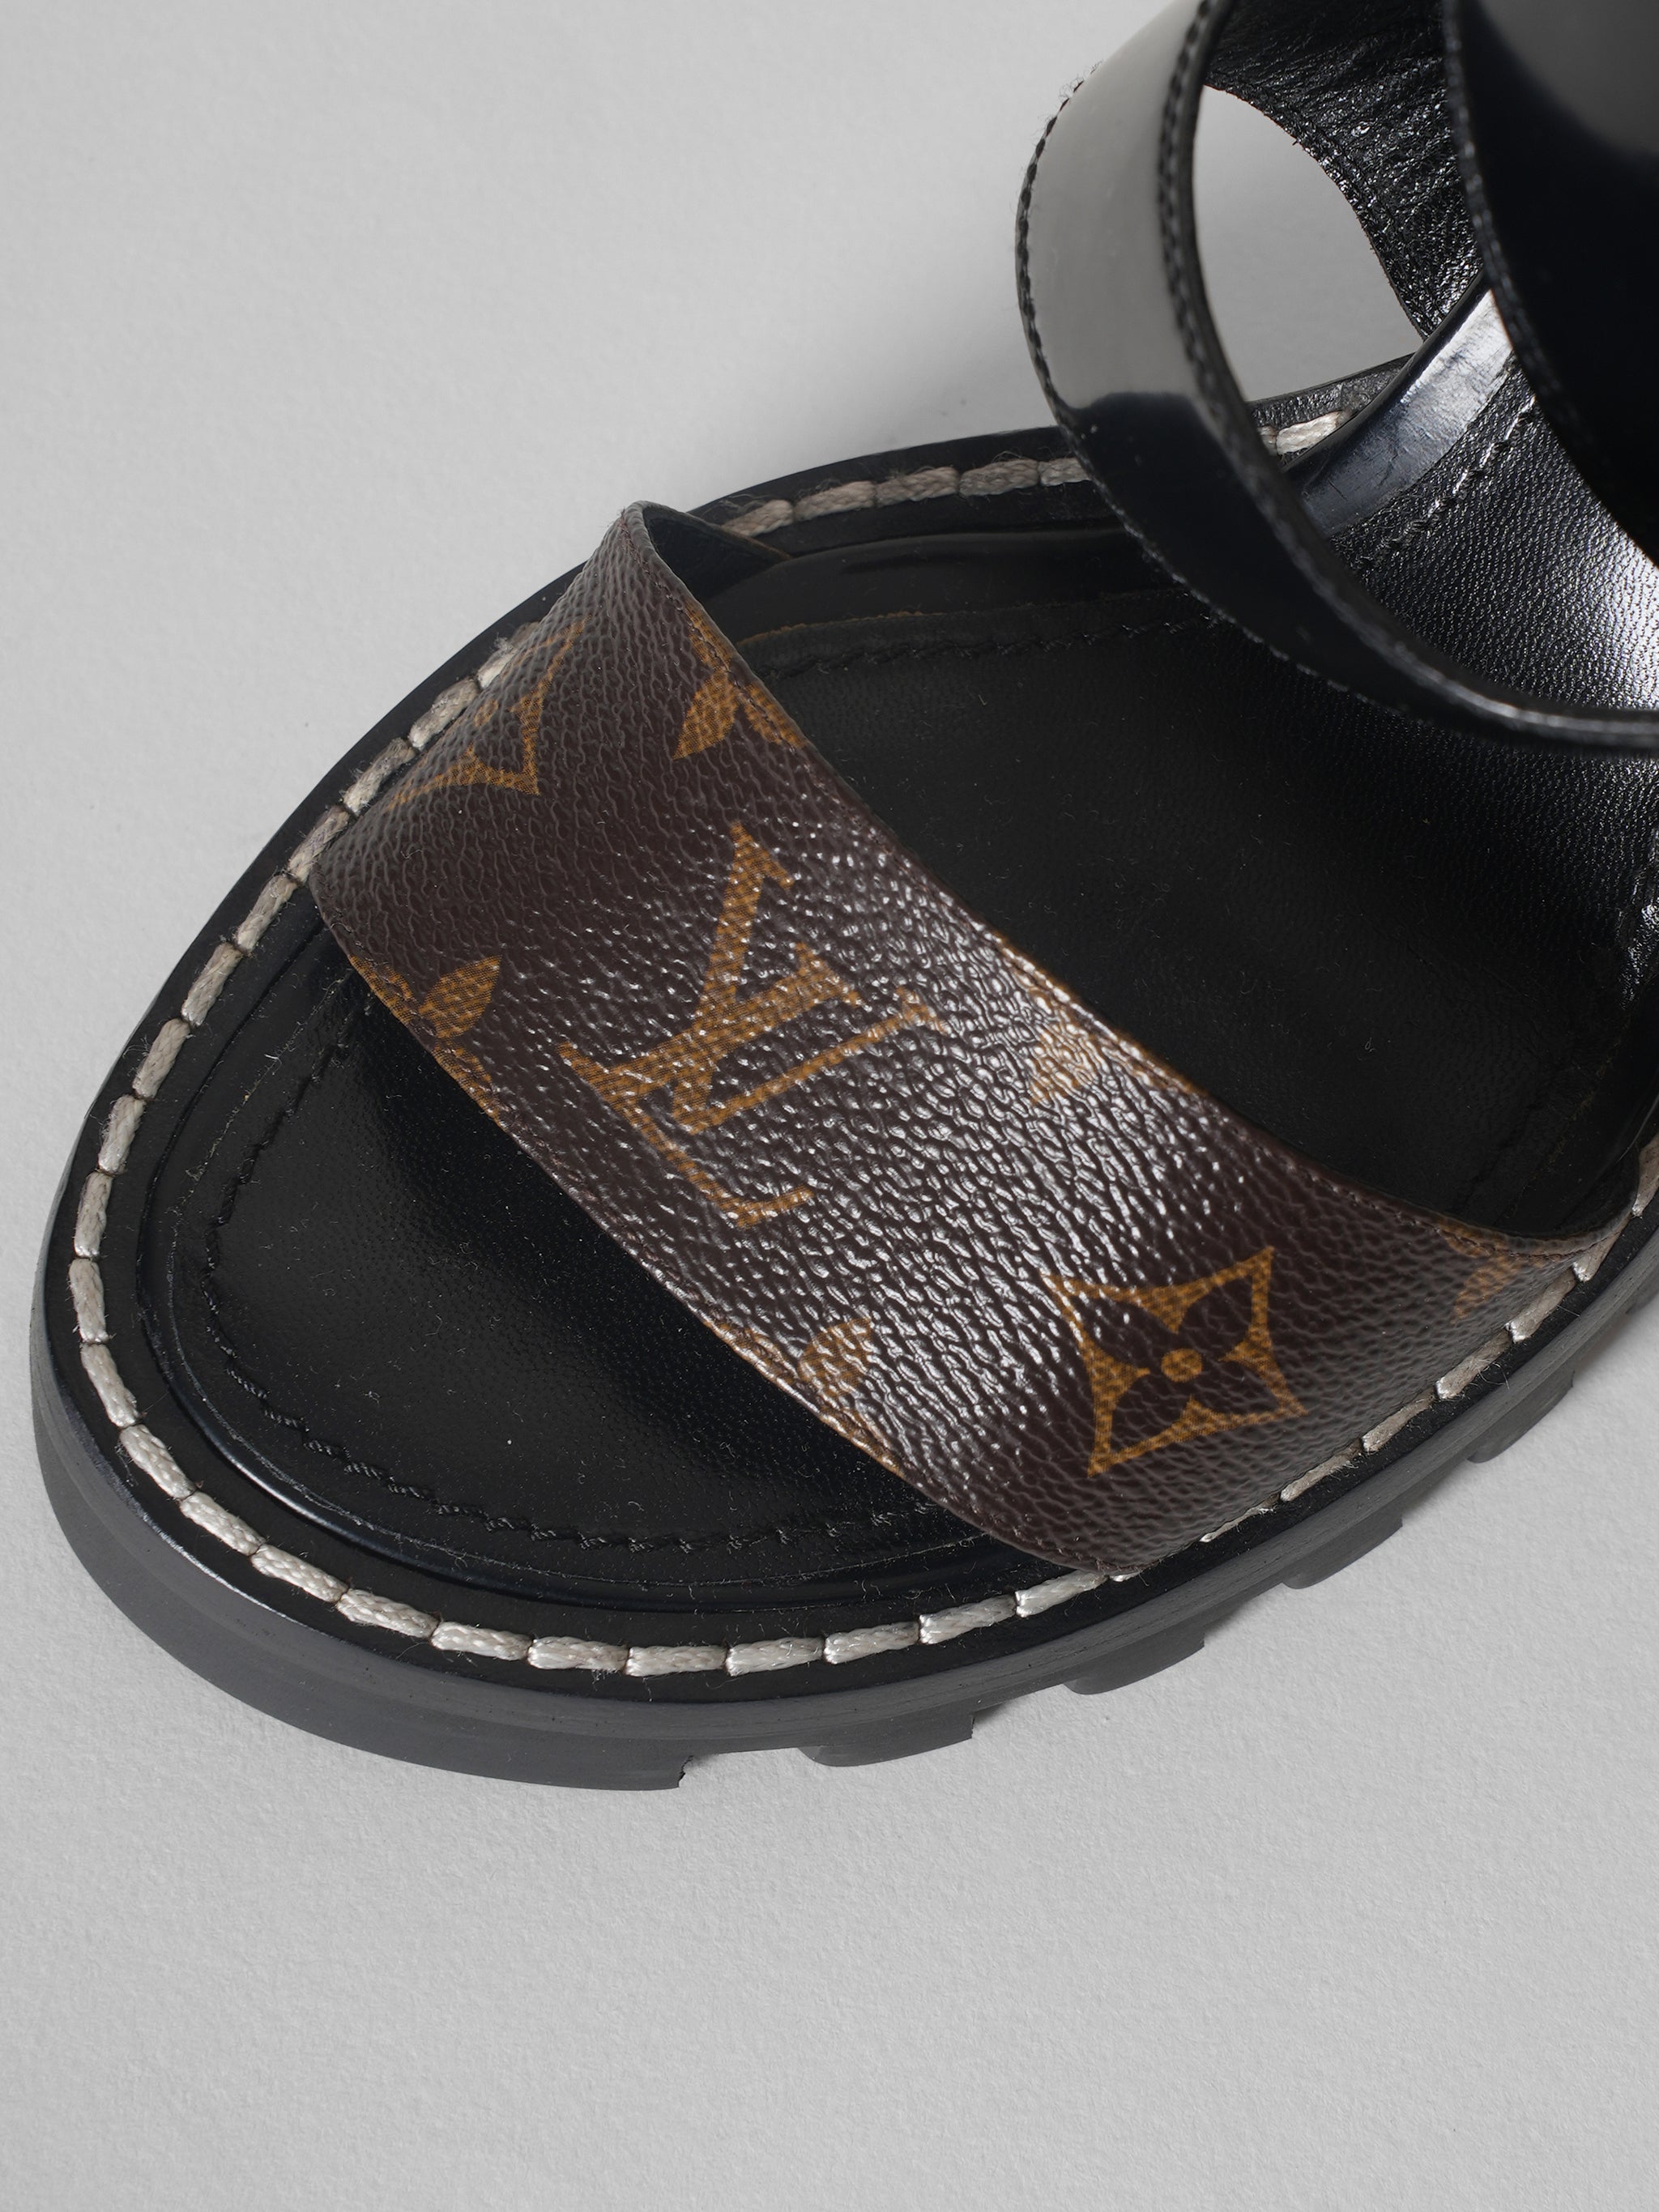 New Louis Vuitton Monogram Patent Leather Cross Strap Sandals